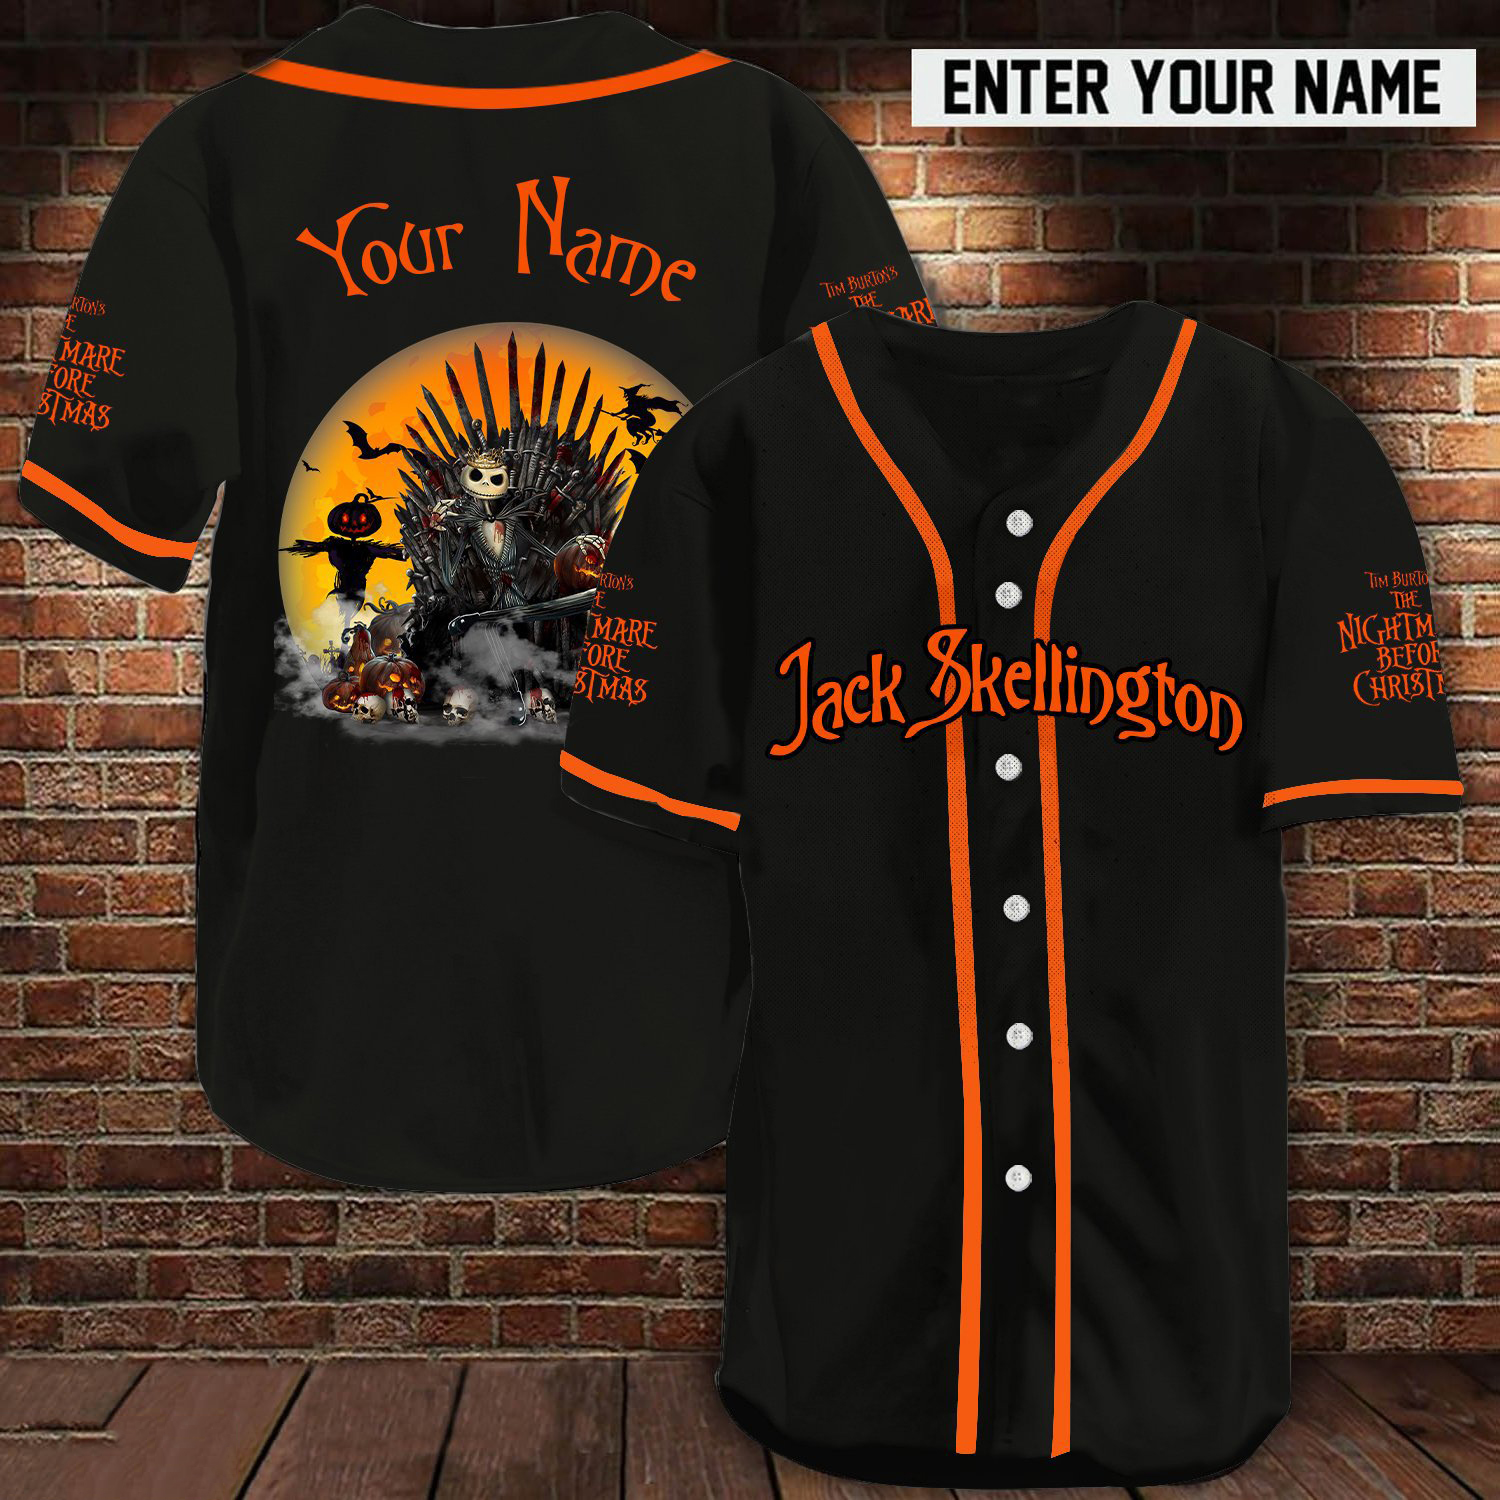 Personalized name Jack Skellington Game Of Thrones baseball jersey shirt